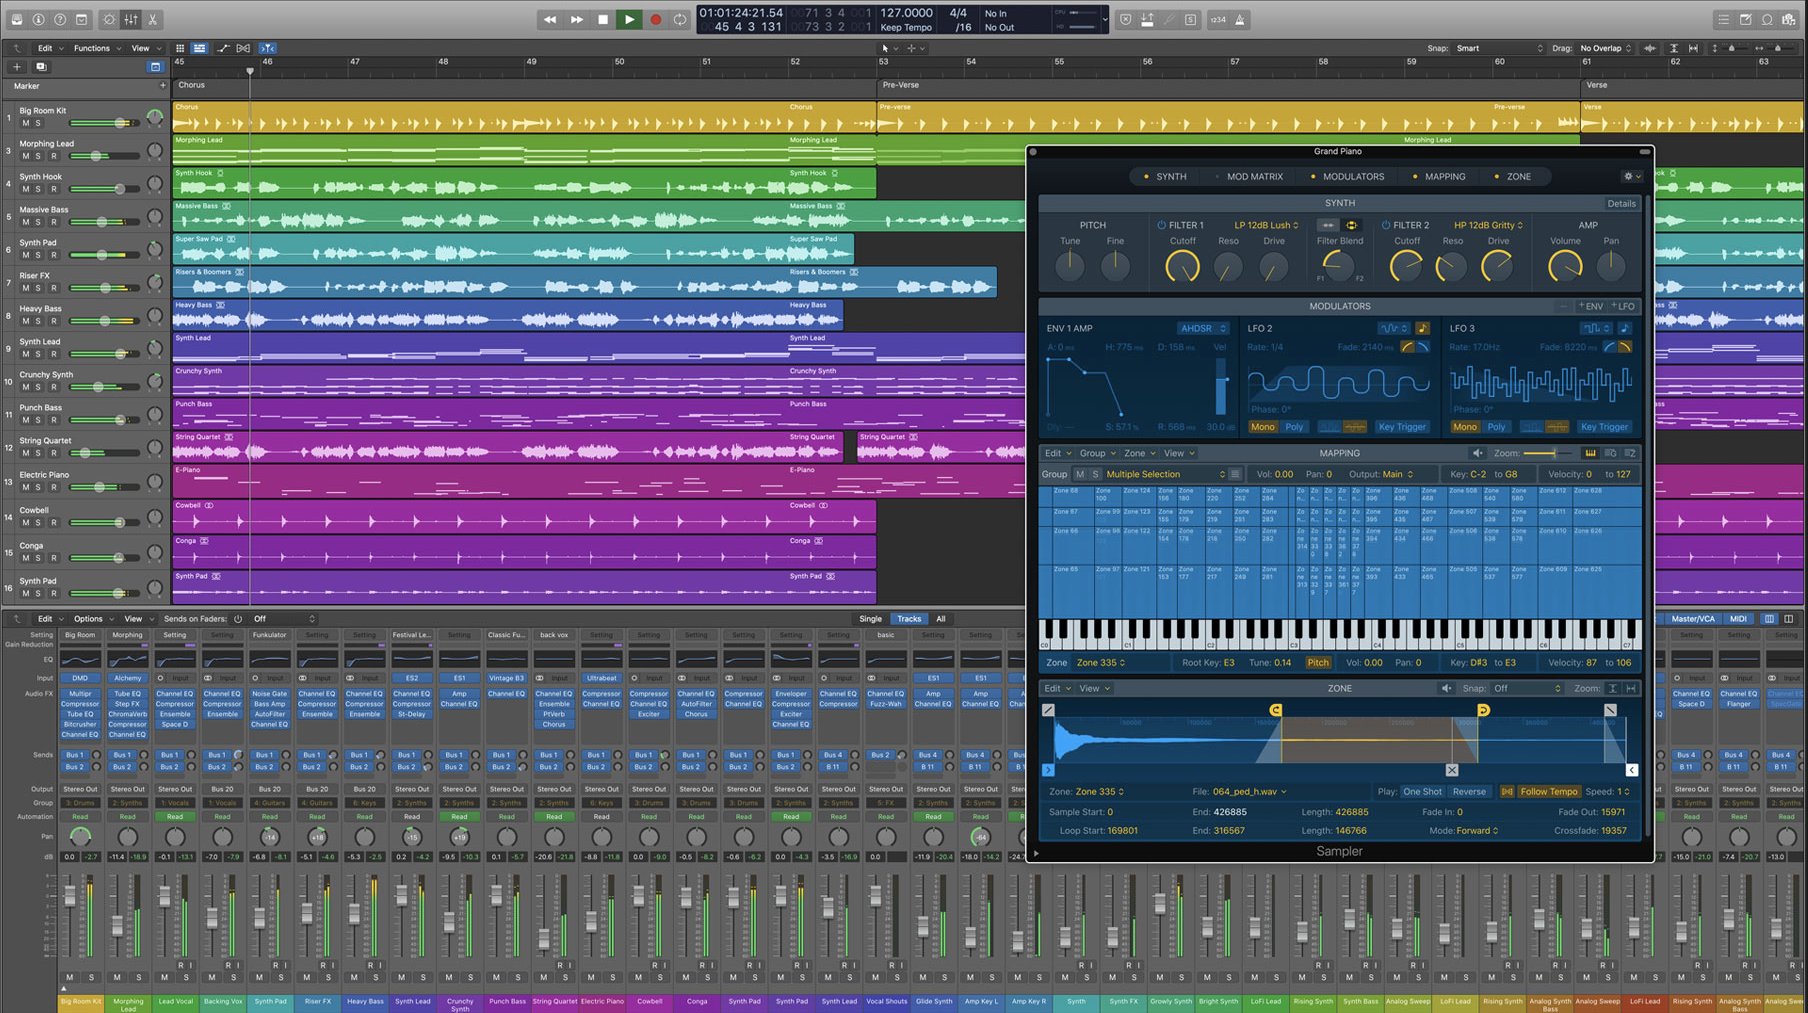 A screenshot of the digital audio software, Logic Pro.